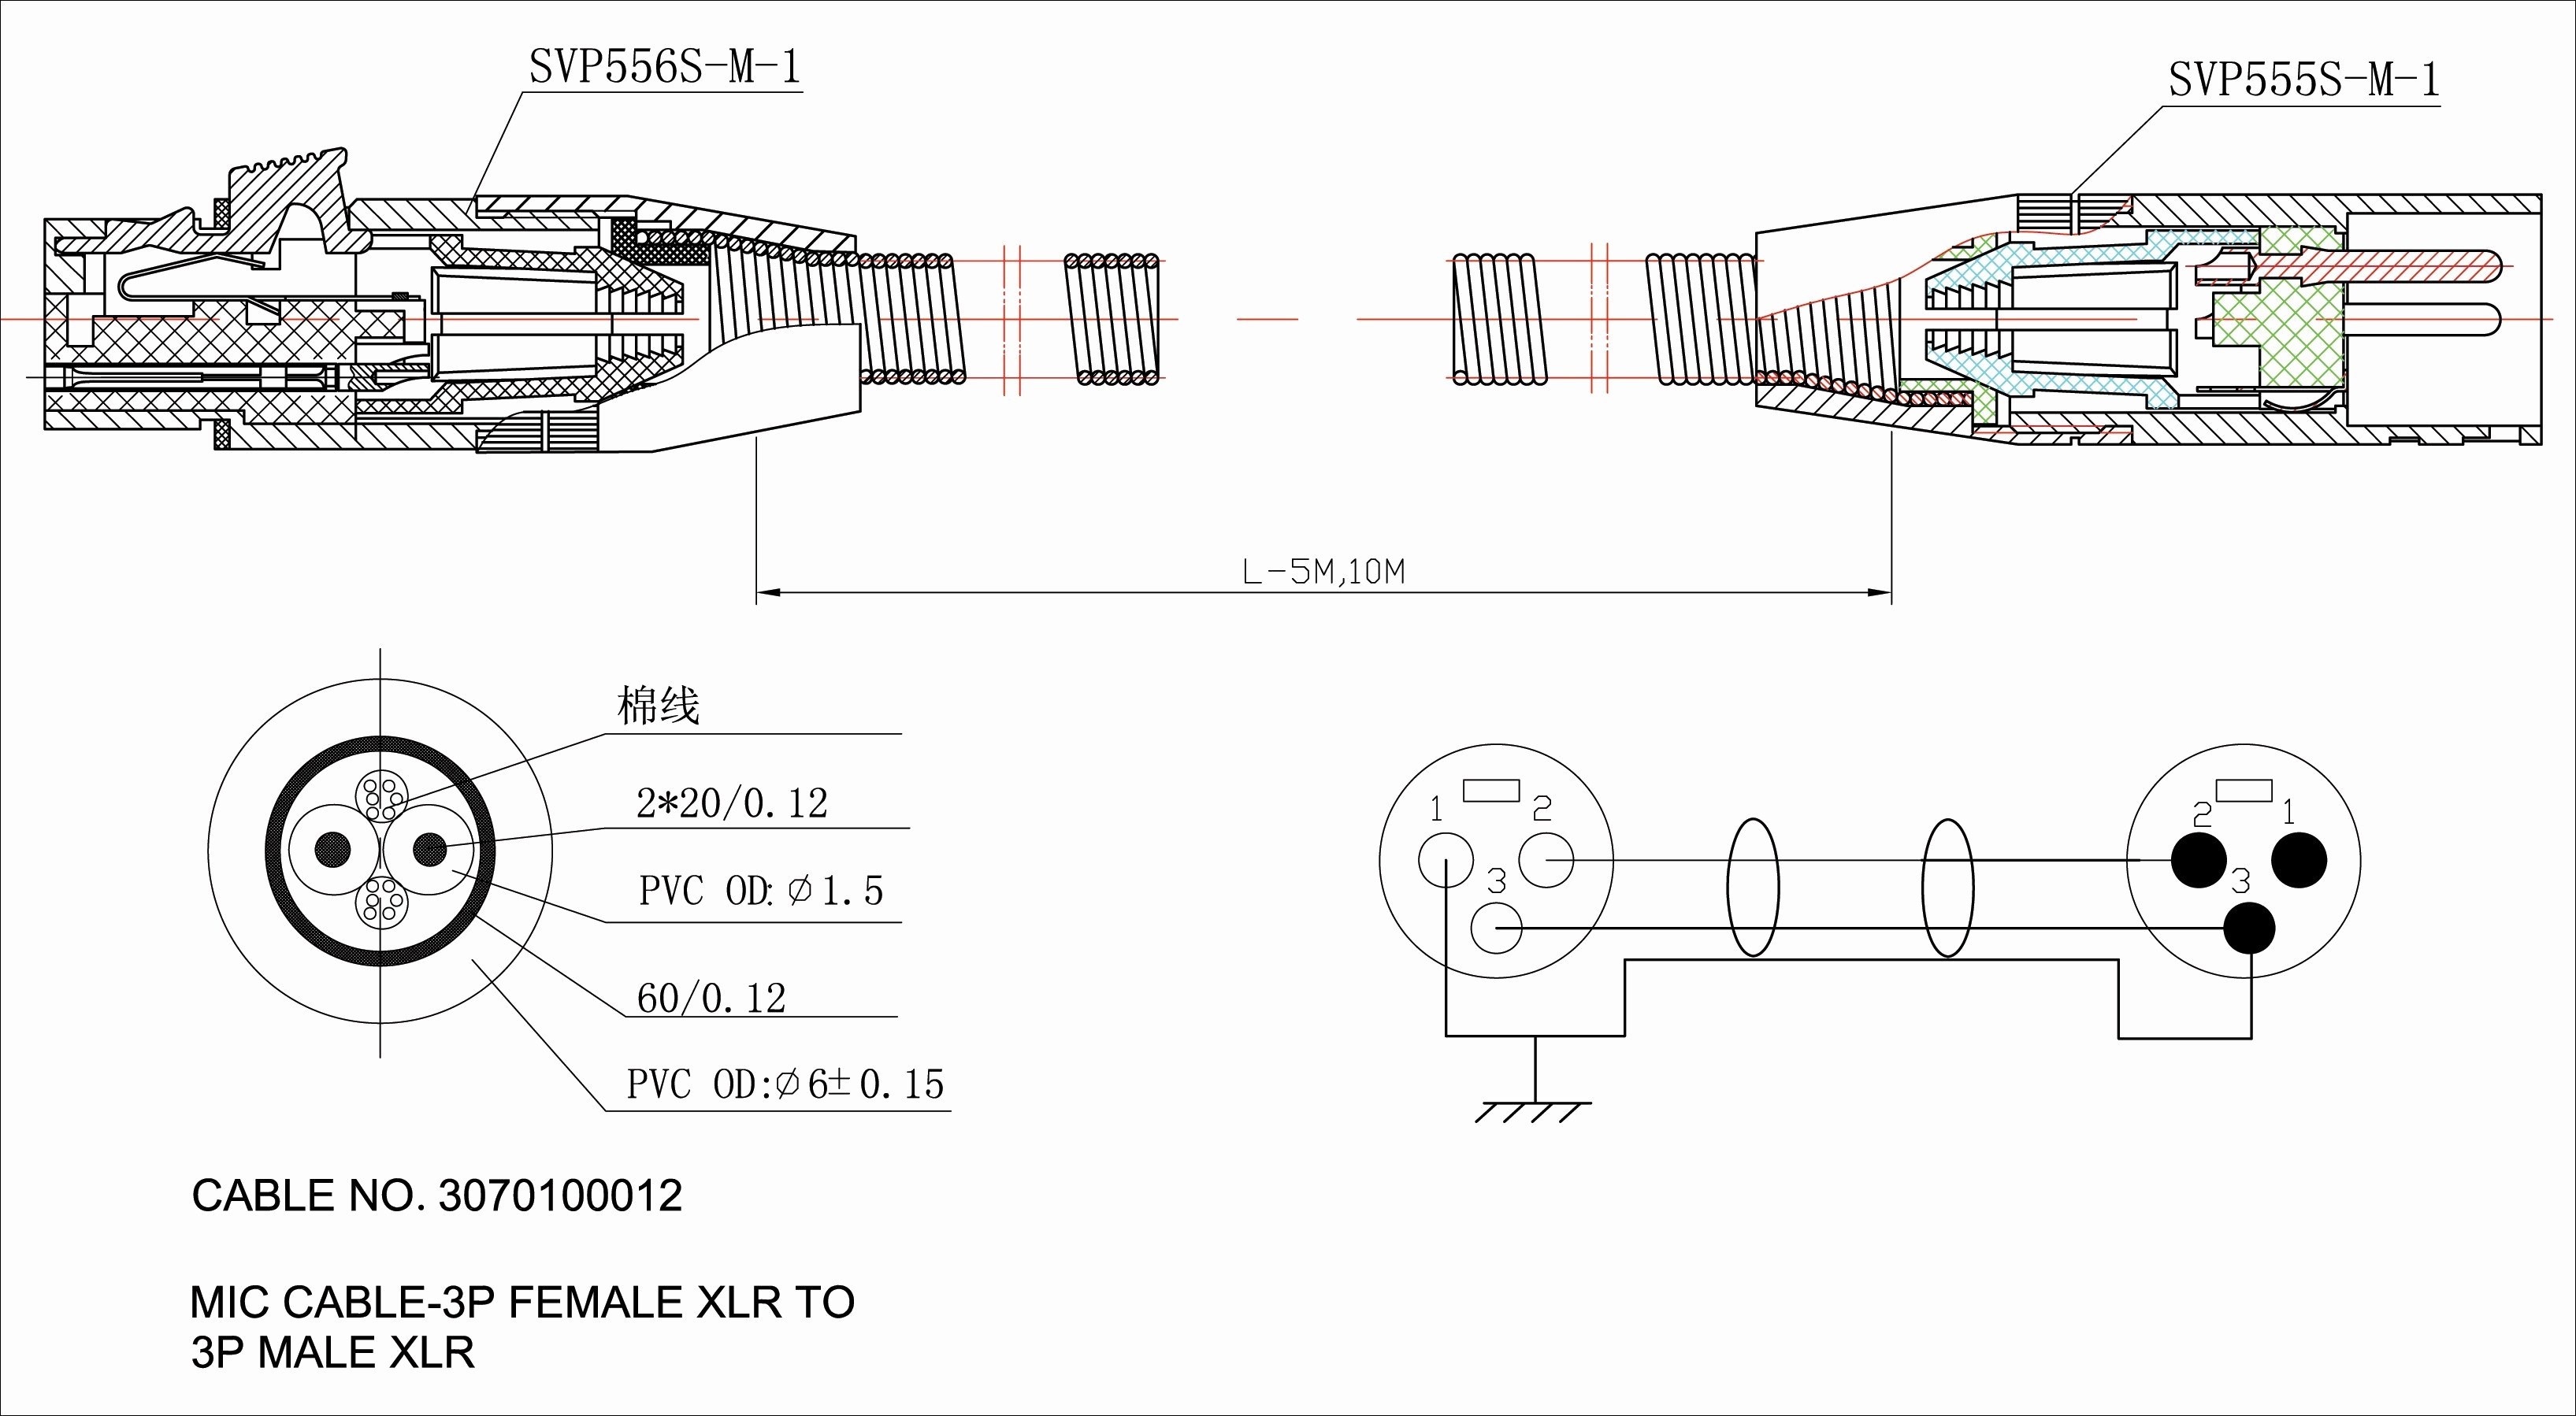 Electric Heat Strip Wiring Diagram Simple Electric Heat Strip Wiring Diagram Elegant An Overview Wiring An